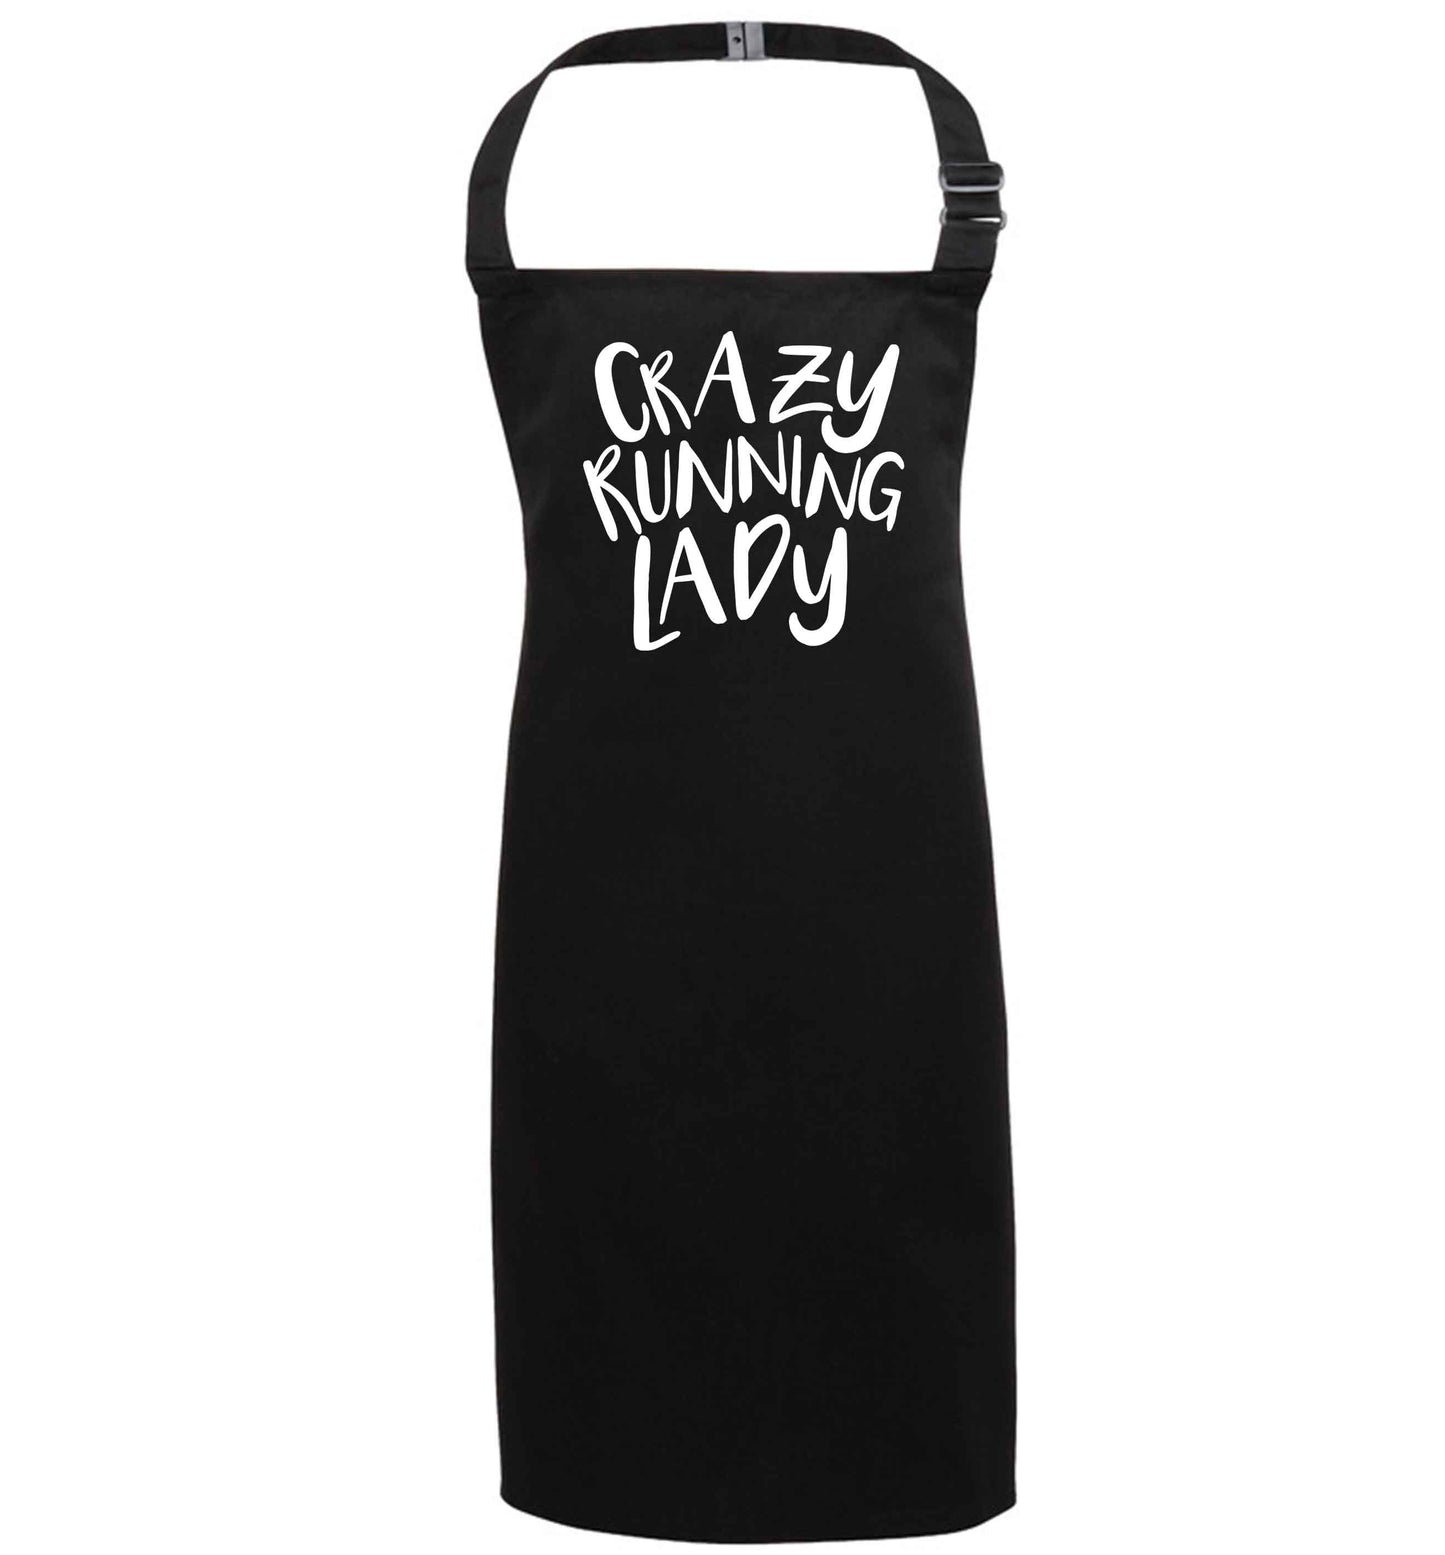 Crazy running lady black apron 7-10 years